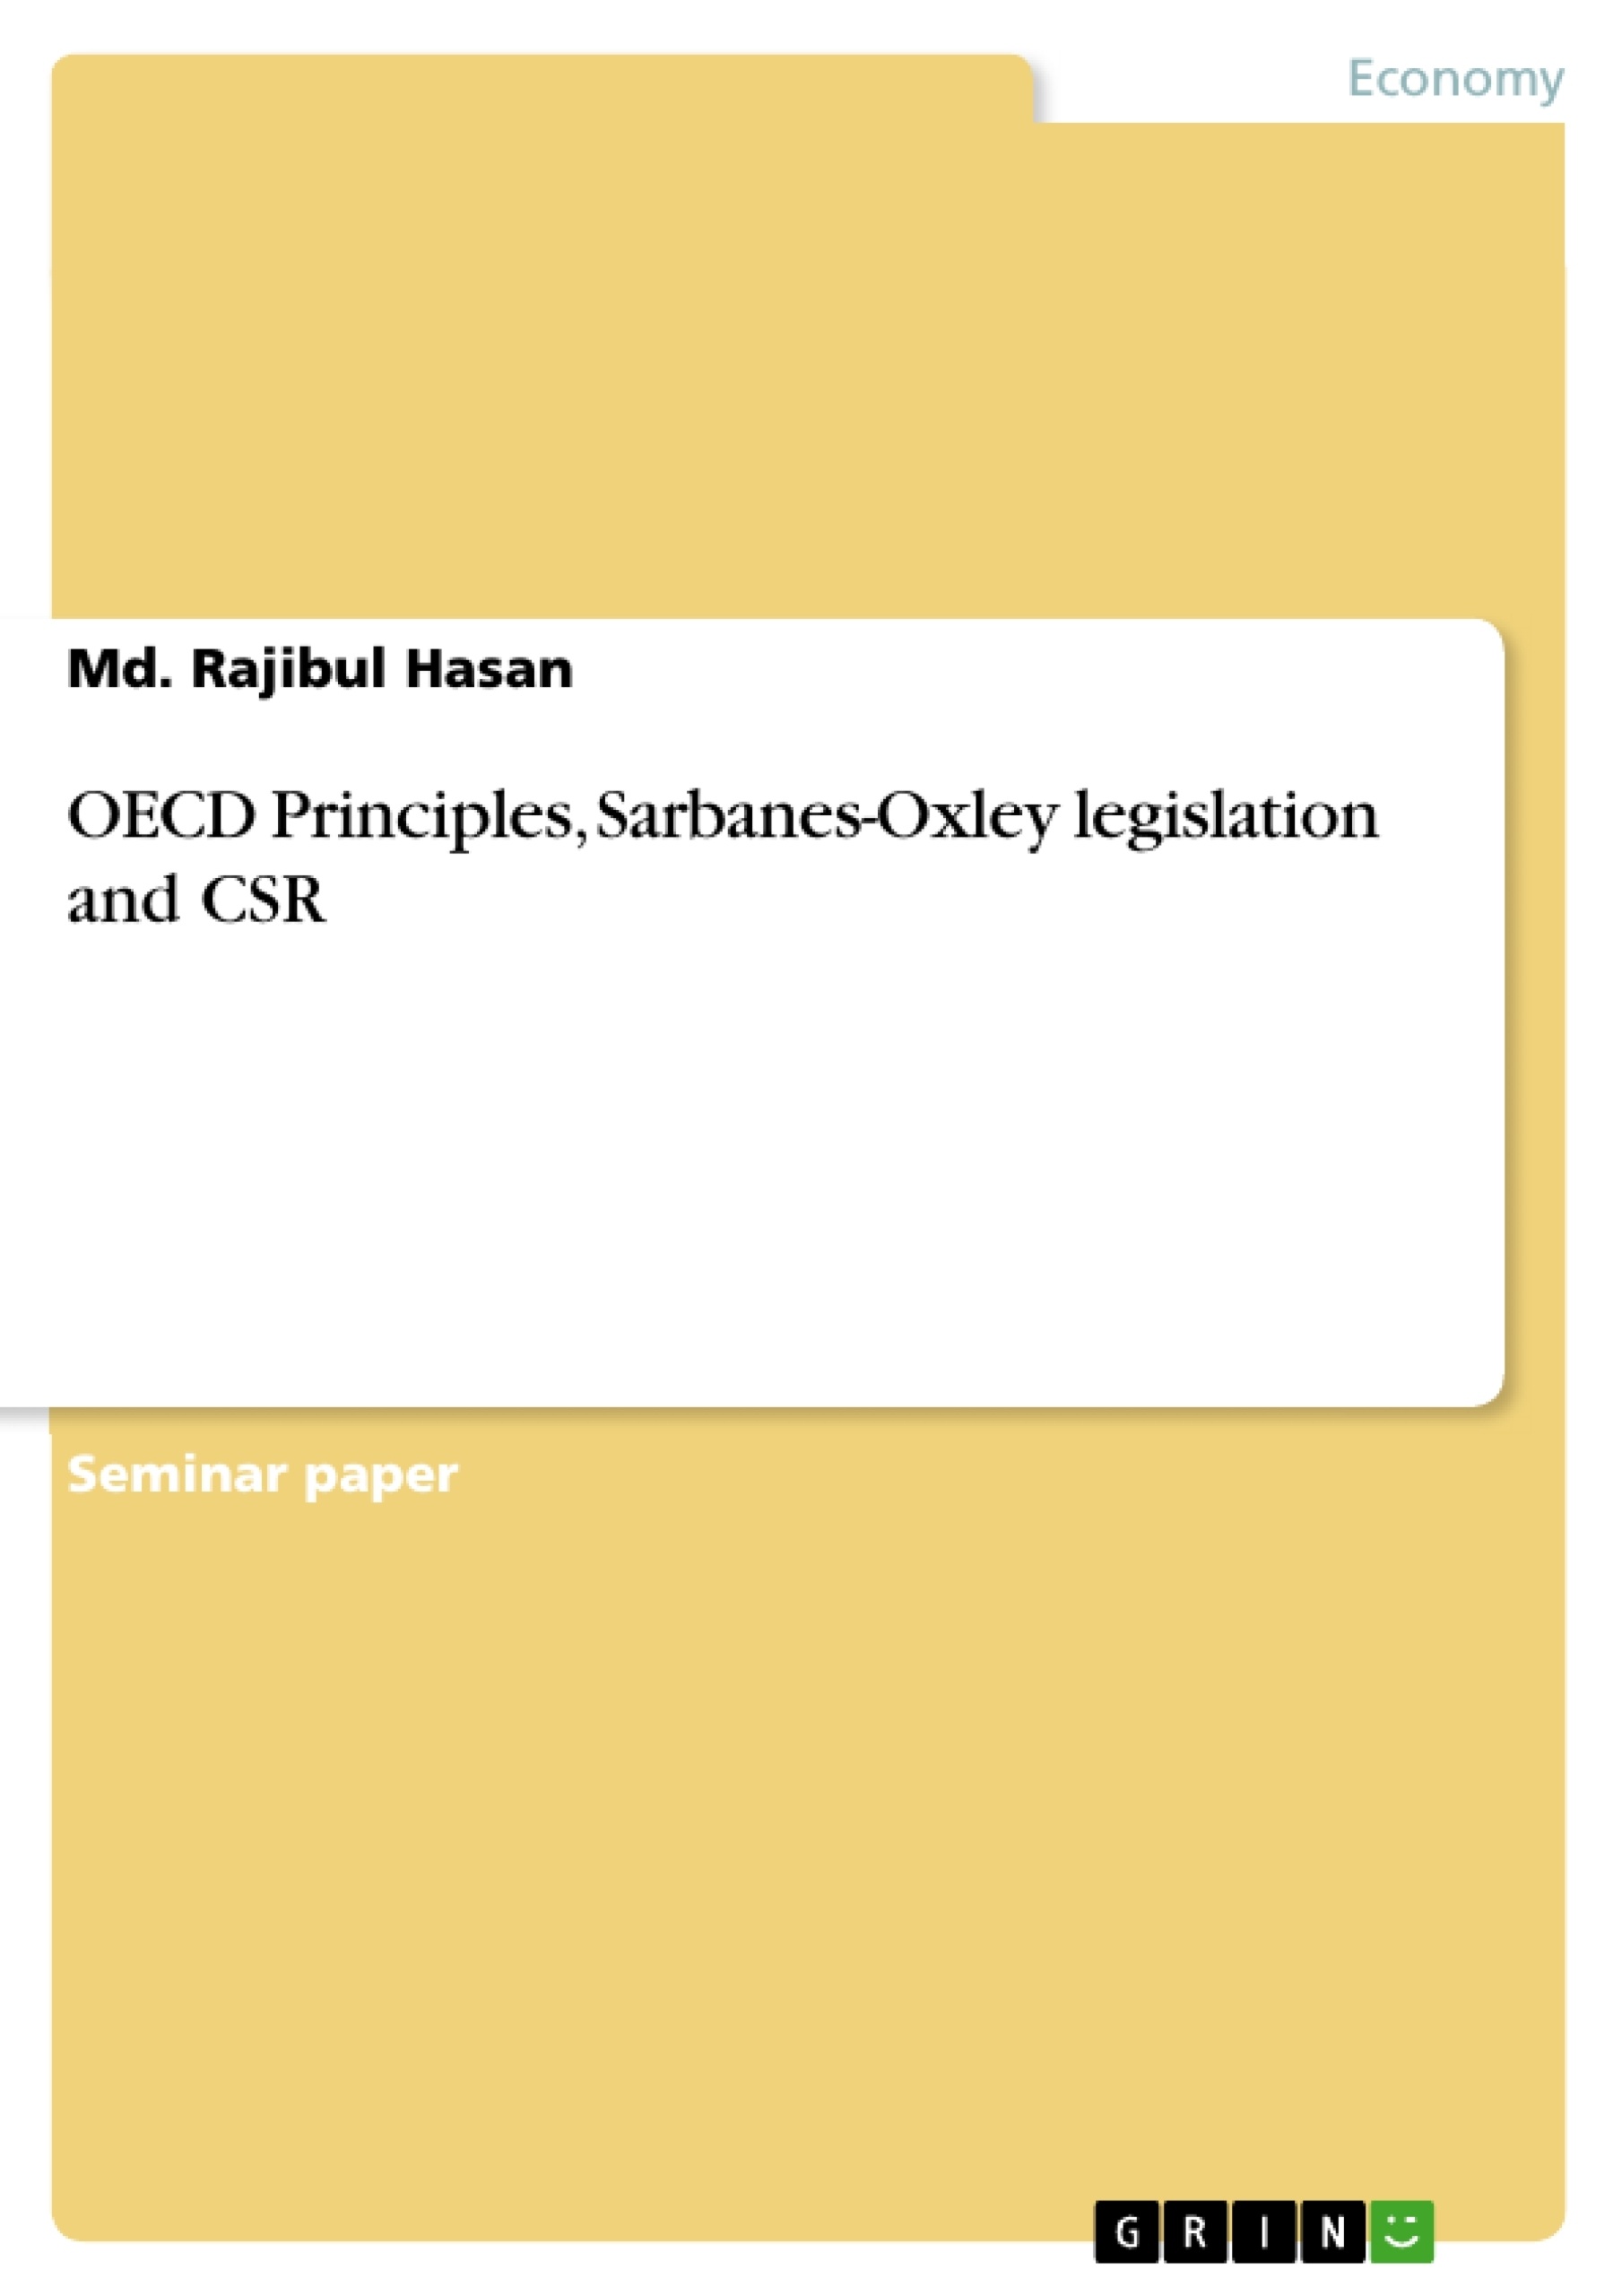 Title: OECD Principles, Sarbanes-Oxley legislation and CSR